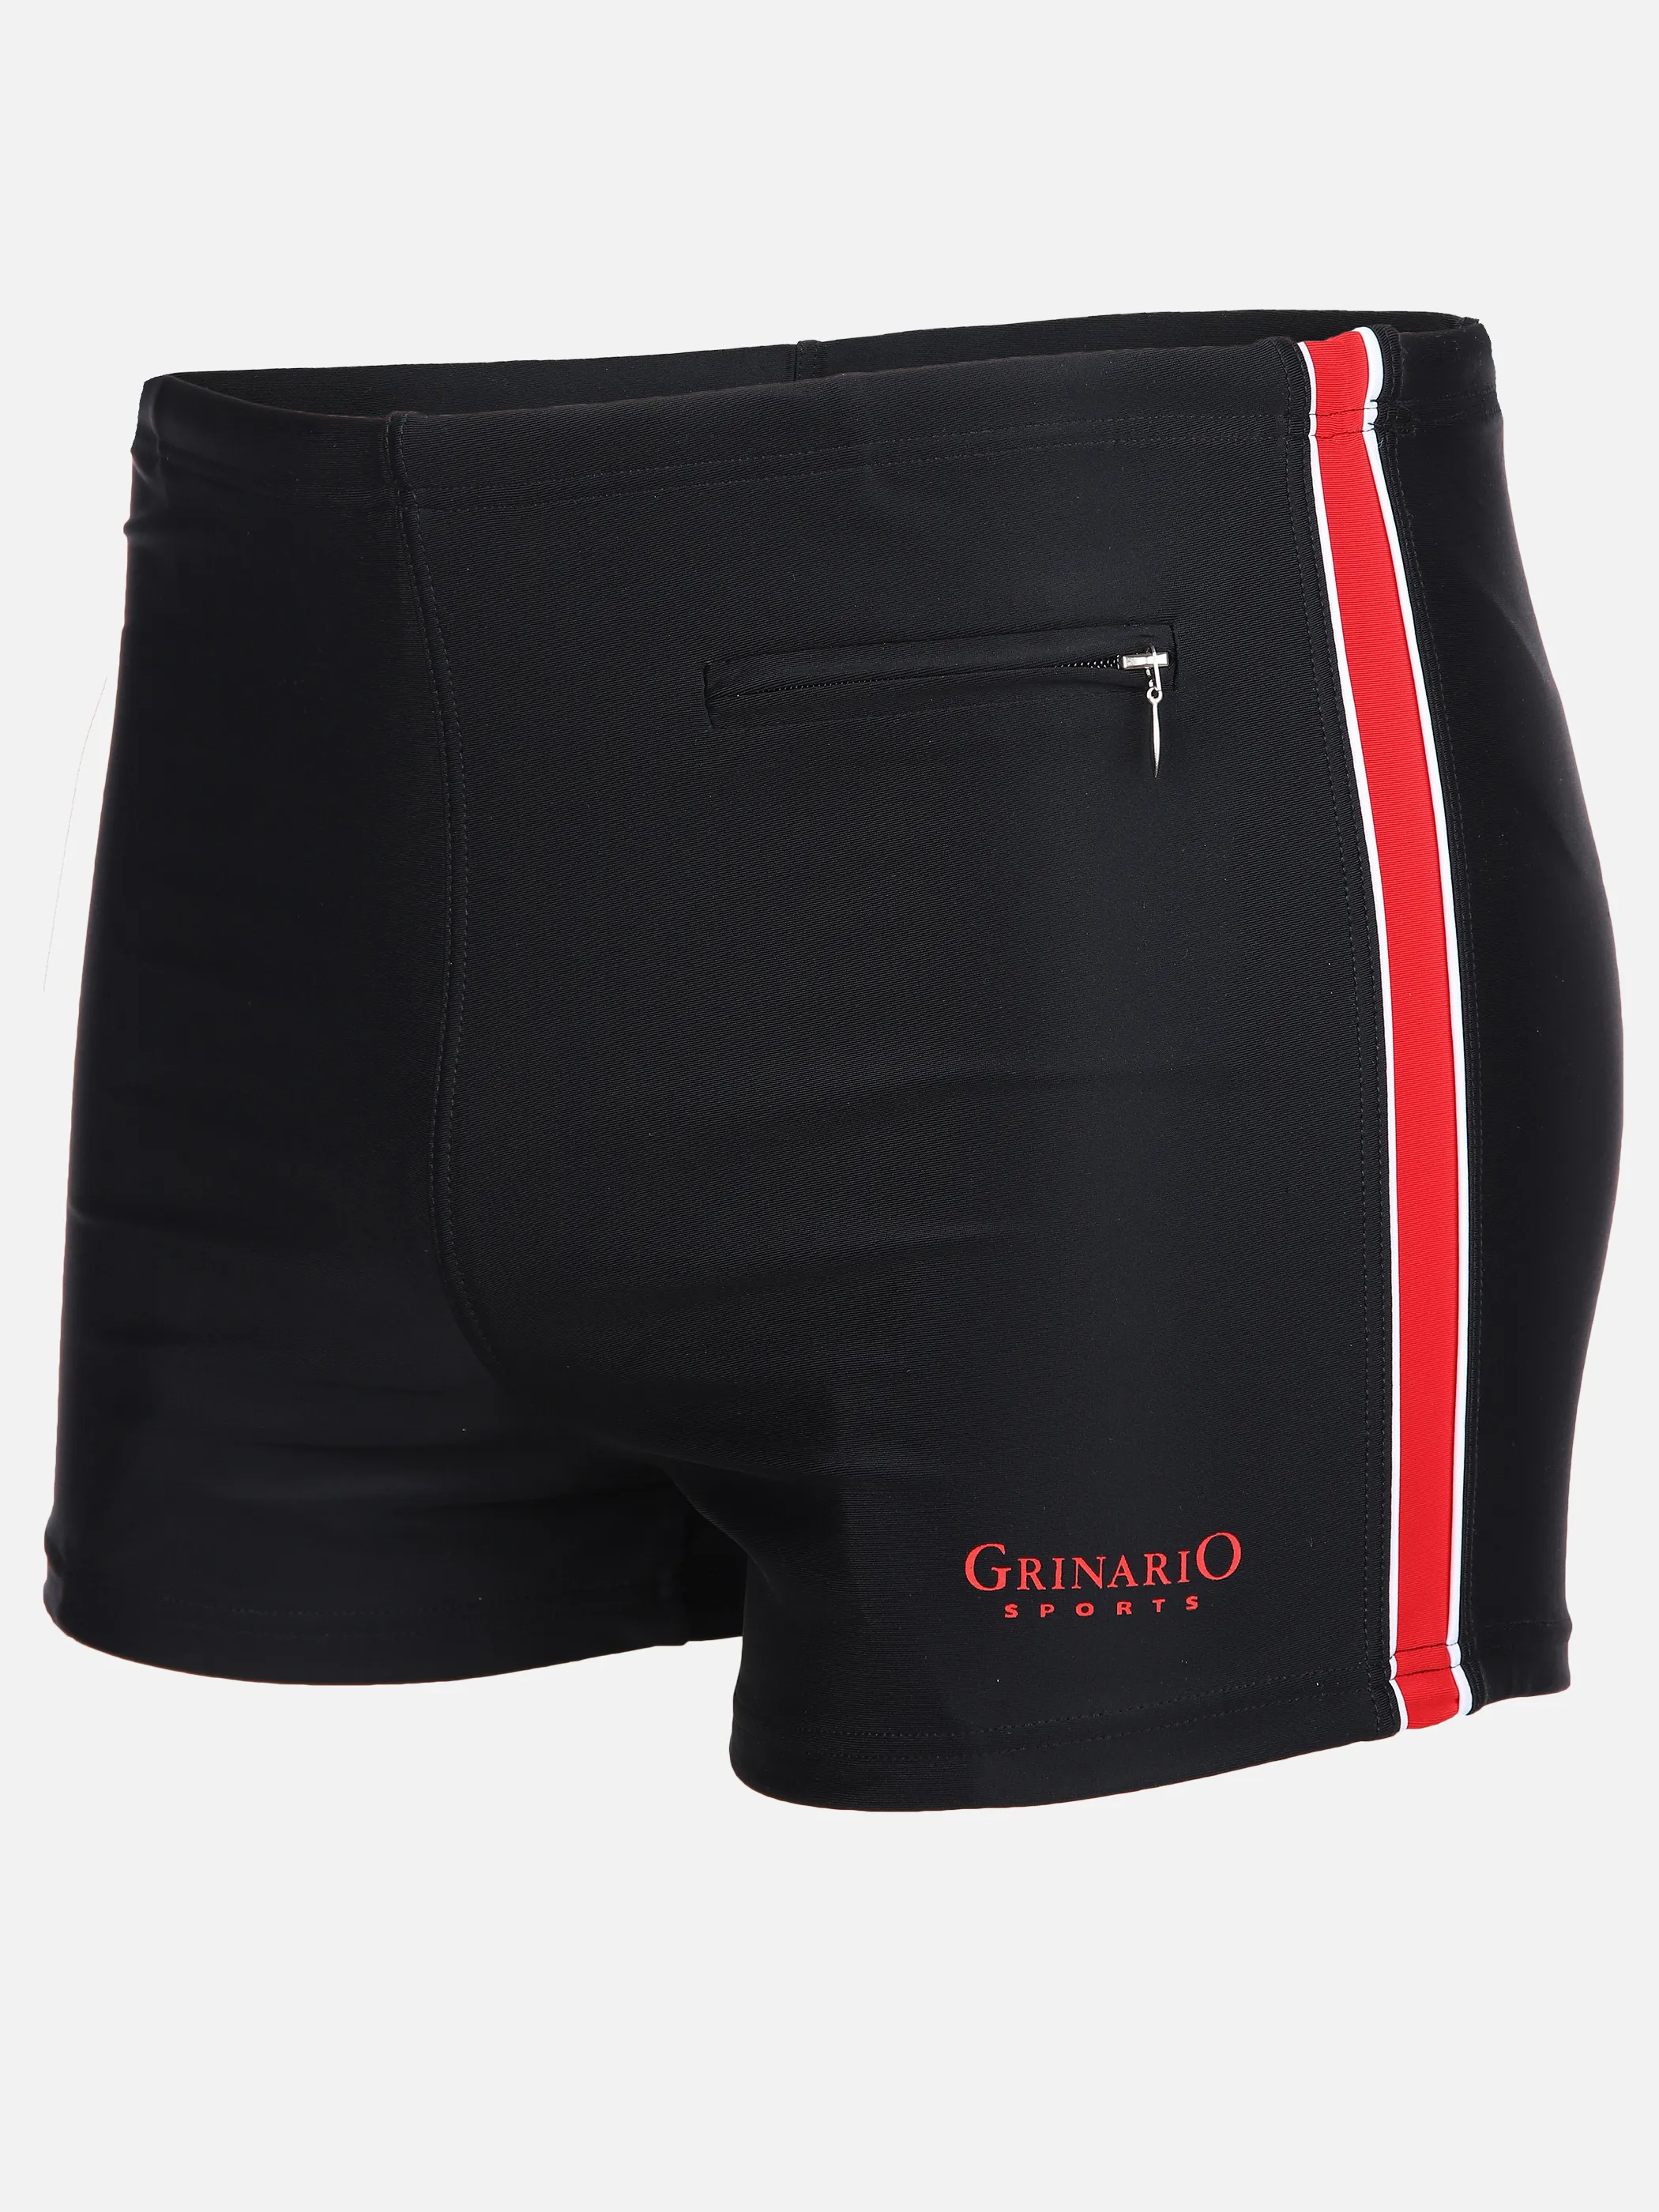 Grinario Sports He- Badehose mit RV Tasche Rot 890133 18-1663TCX 1